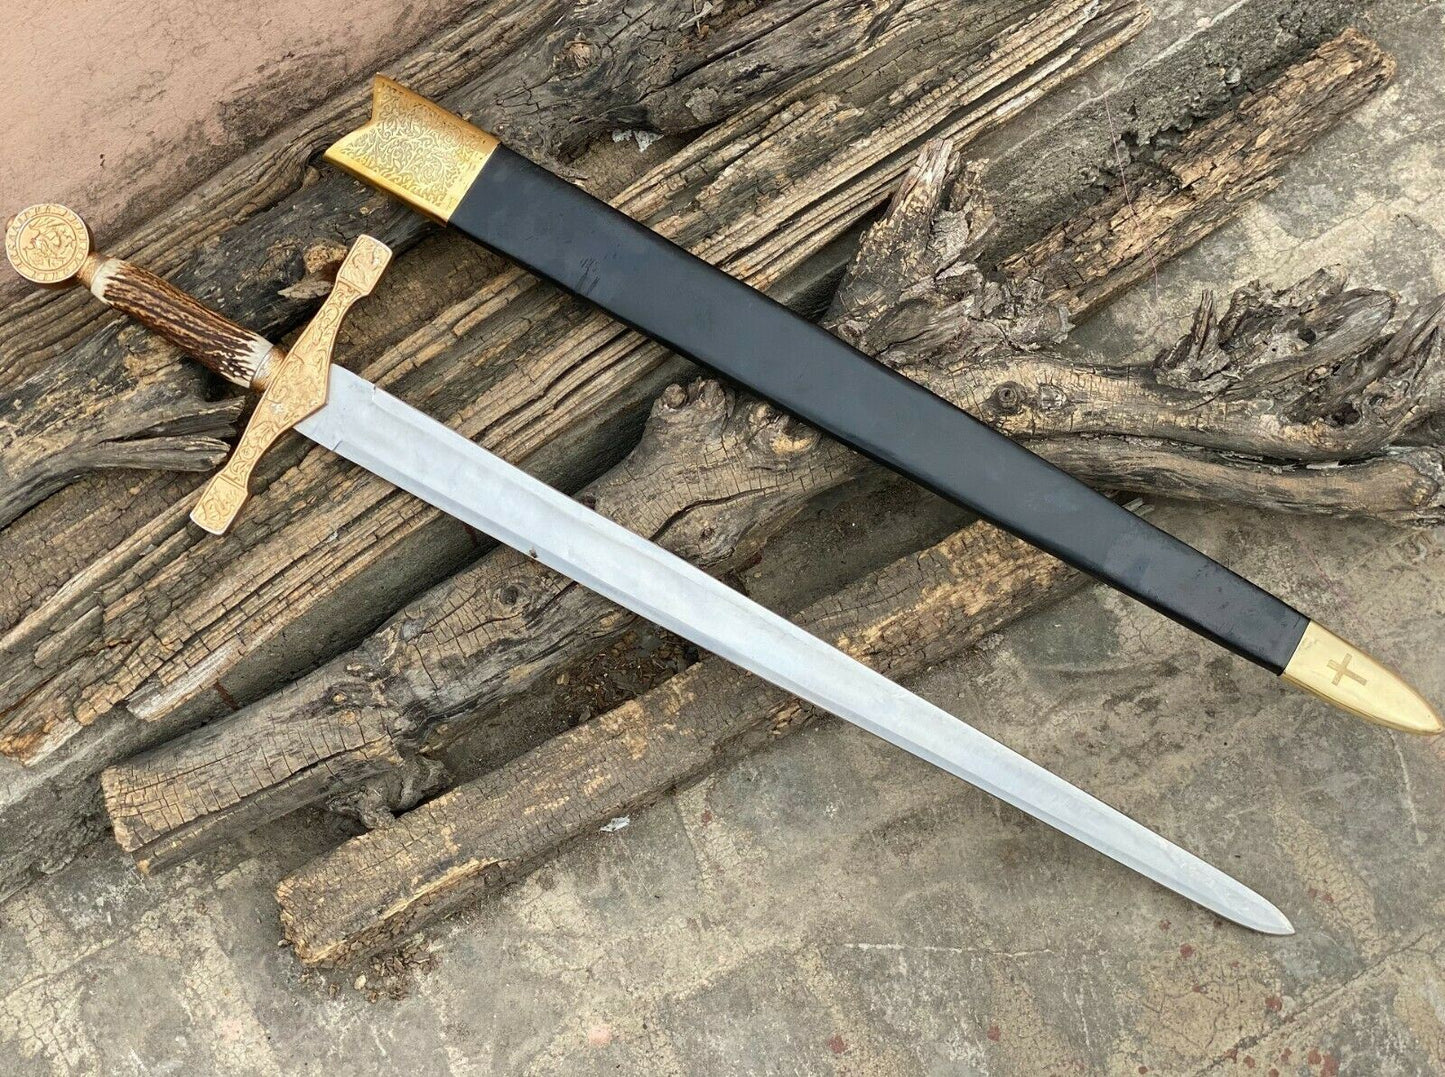 King Arthur Excalibur Longsword - Replica Medieval Knights Sword Stag Handle